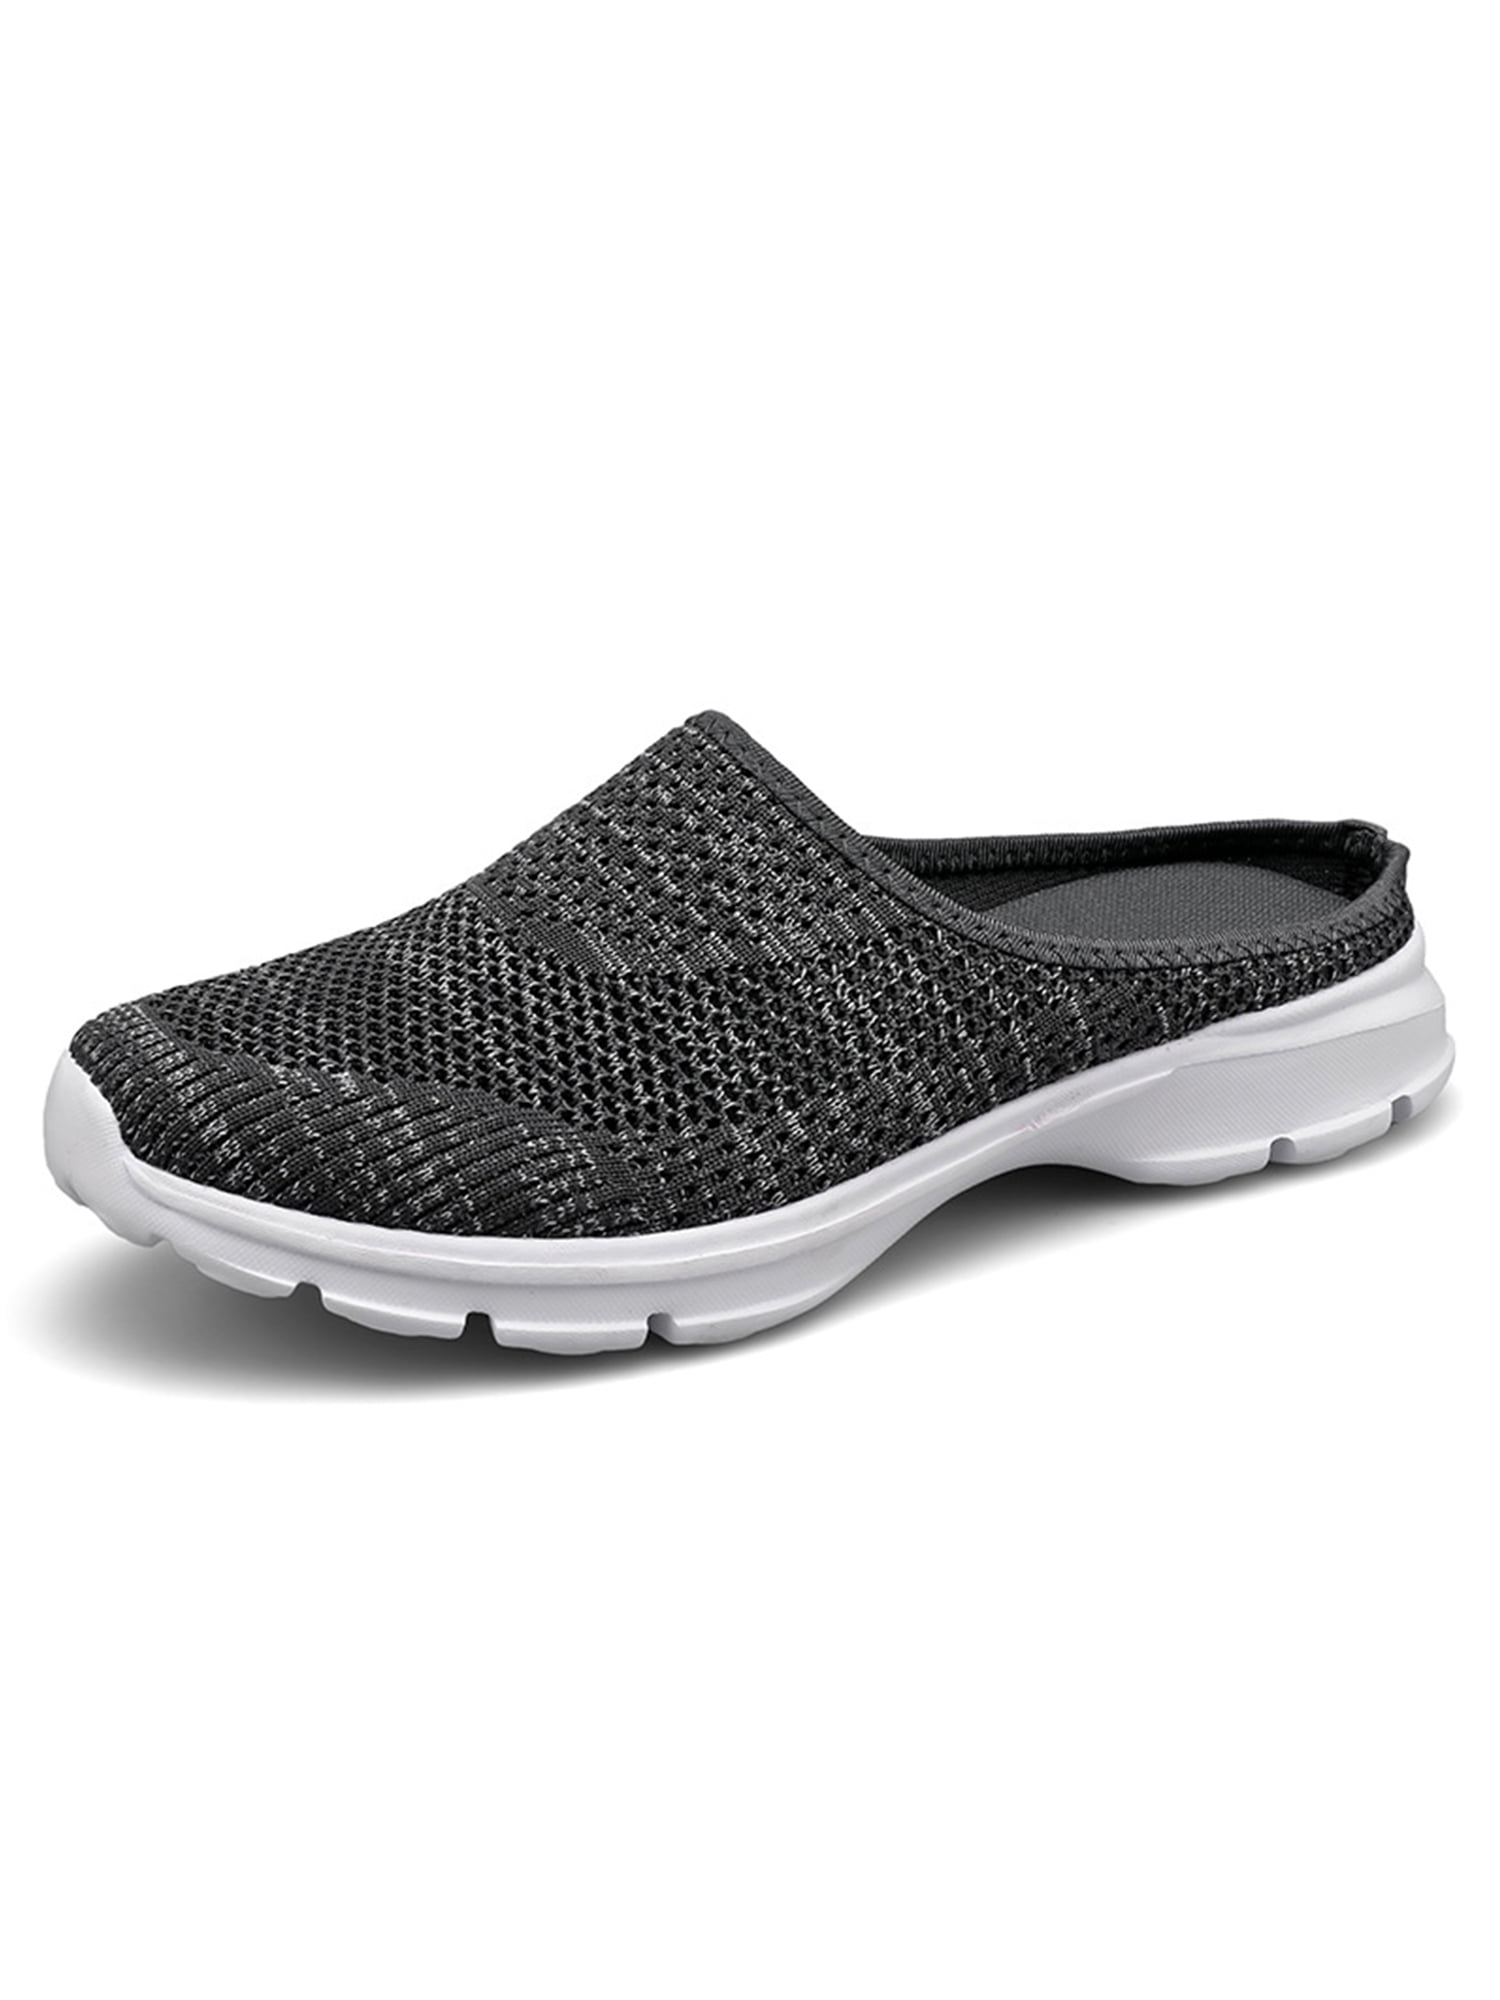 Unisex Shoes Womens Slip-On Mule Sneaker Mens Garden Clog Breathable House Slippers Walking Beach Shoes - Walmart.com